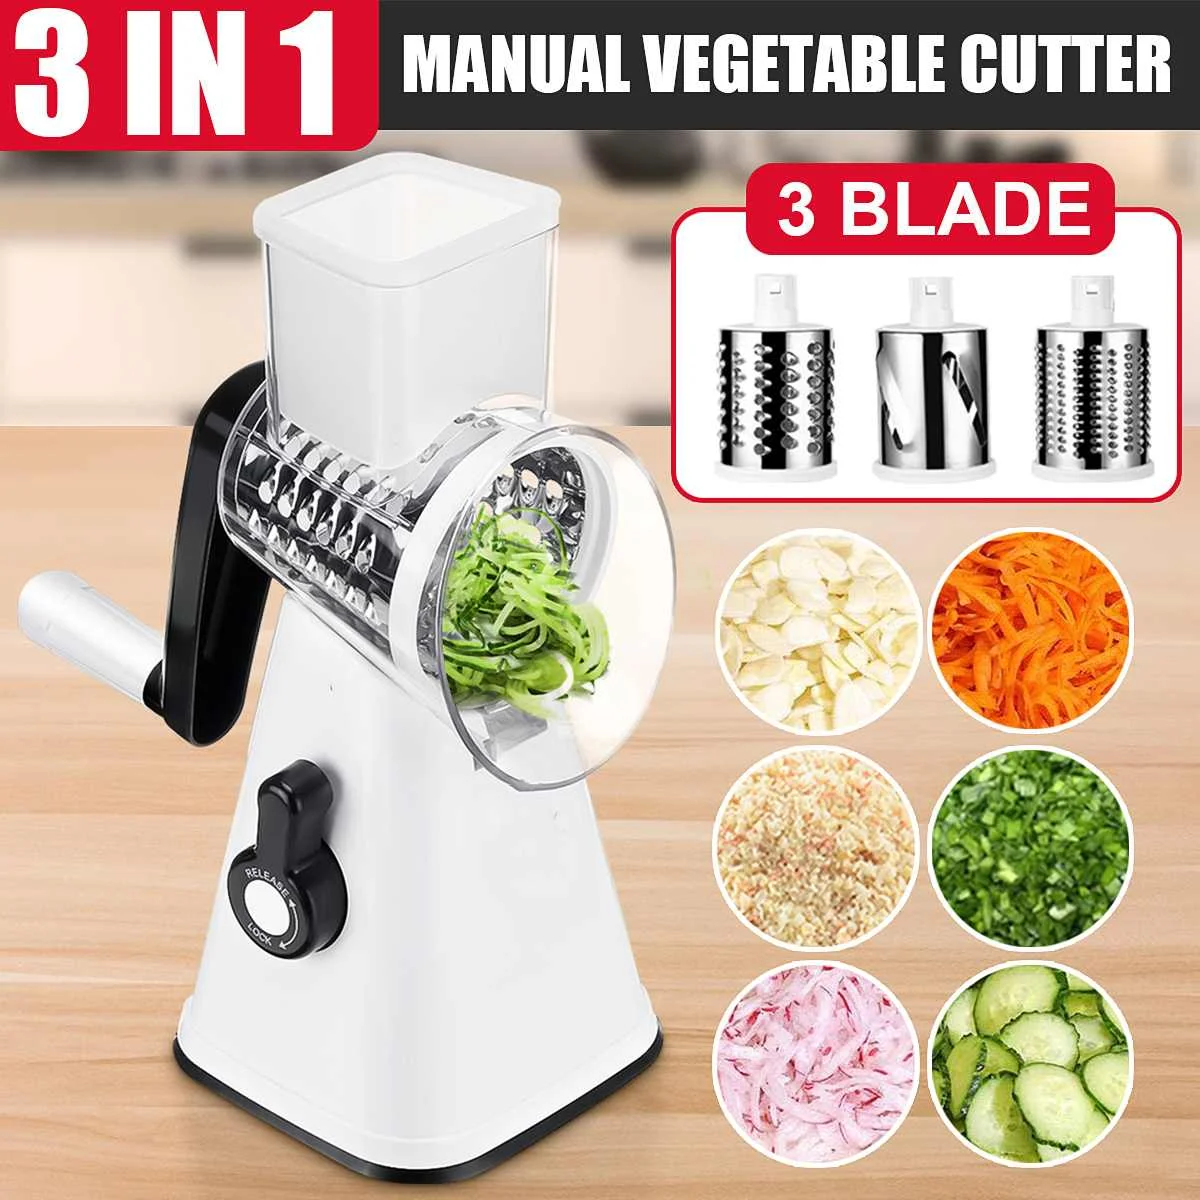 

Vegetable Slicer Manual Kitchen Accessories Grater Vegetable Chopper 3 in 1 Round Cutter Potato Spiralizer Home Gadget Tool Item